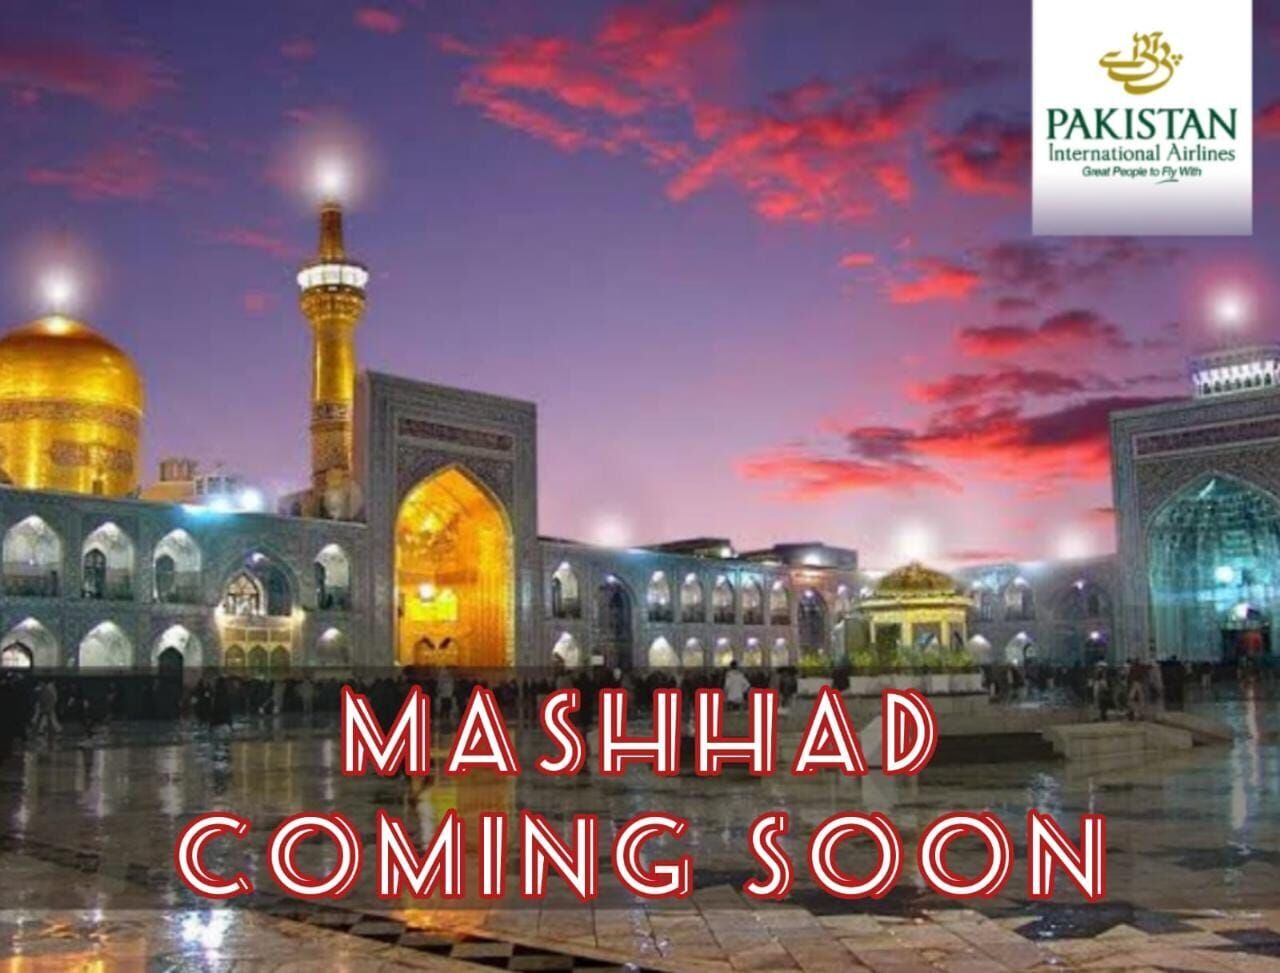 لاہور-مشہد کی براہ راست پرواز جلد ہی شروع کی جائے گی